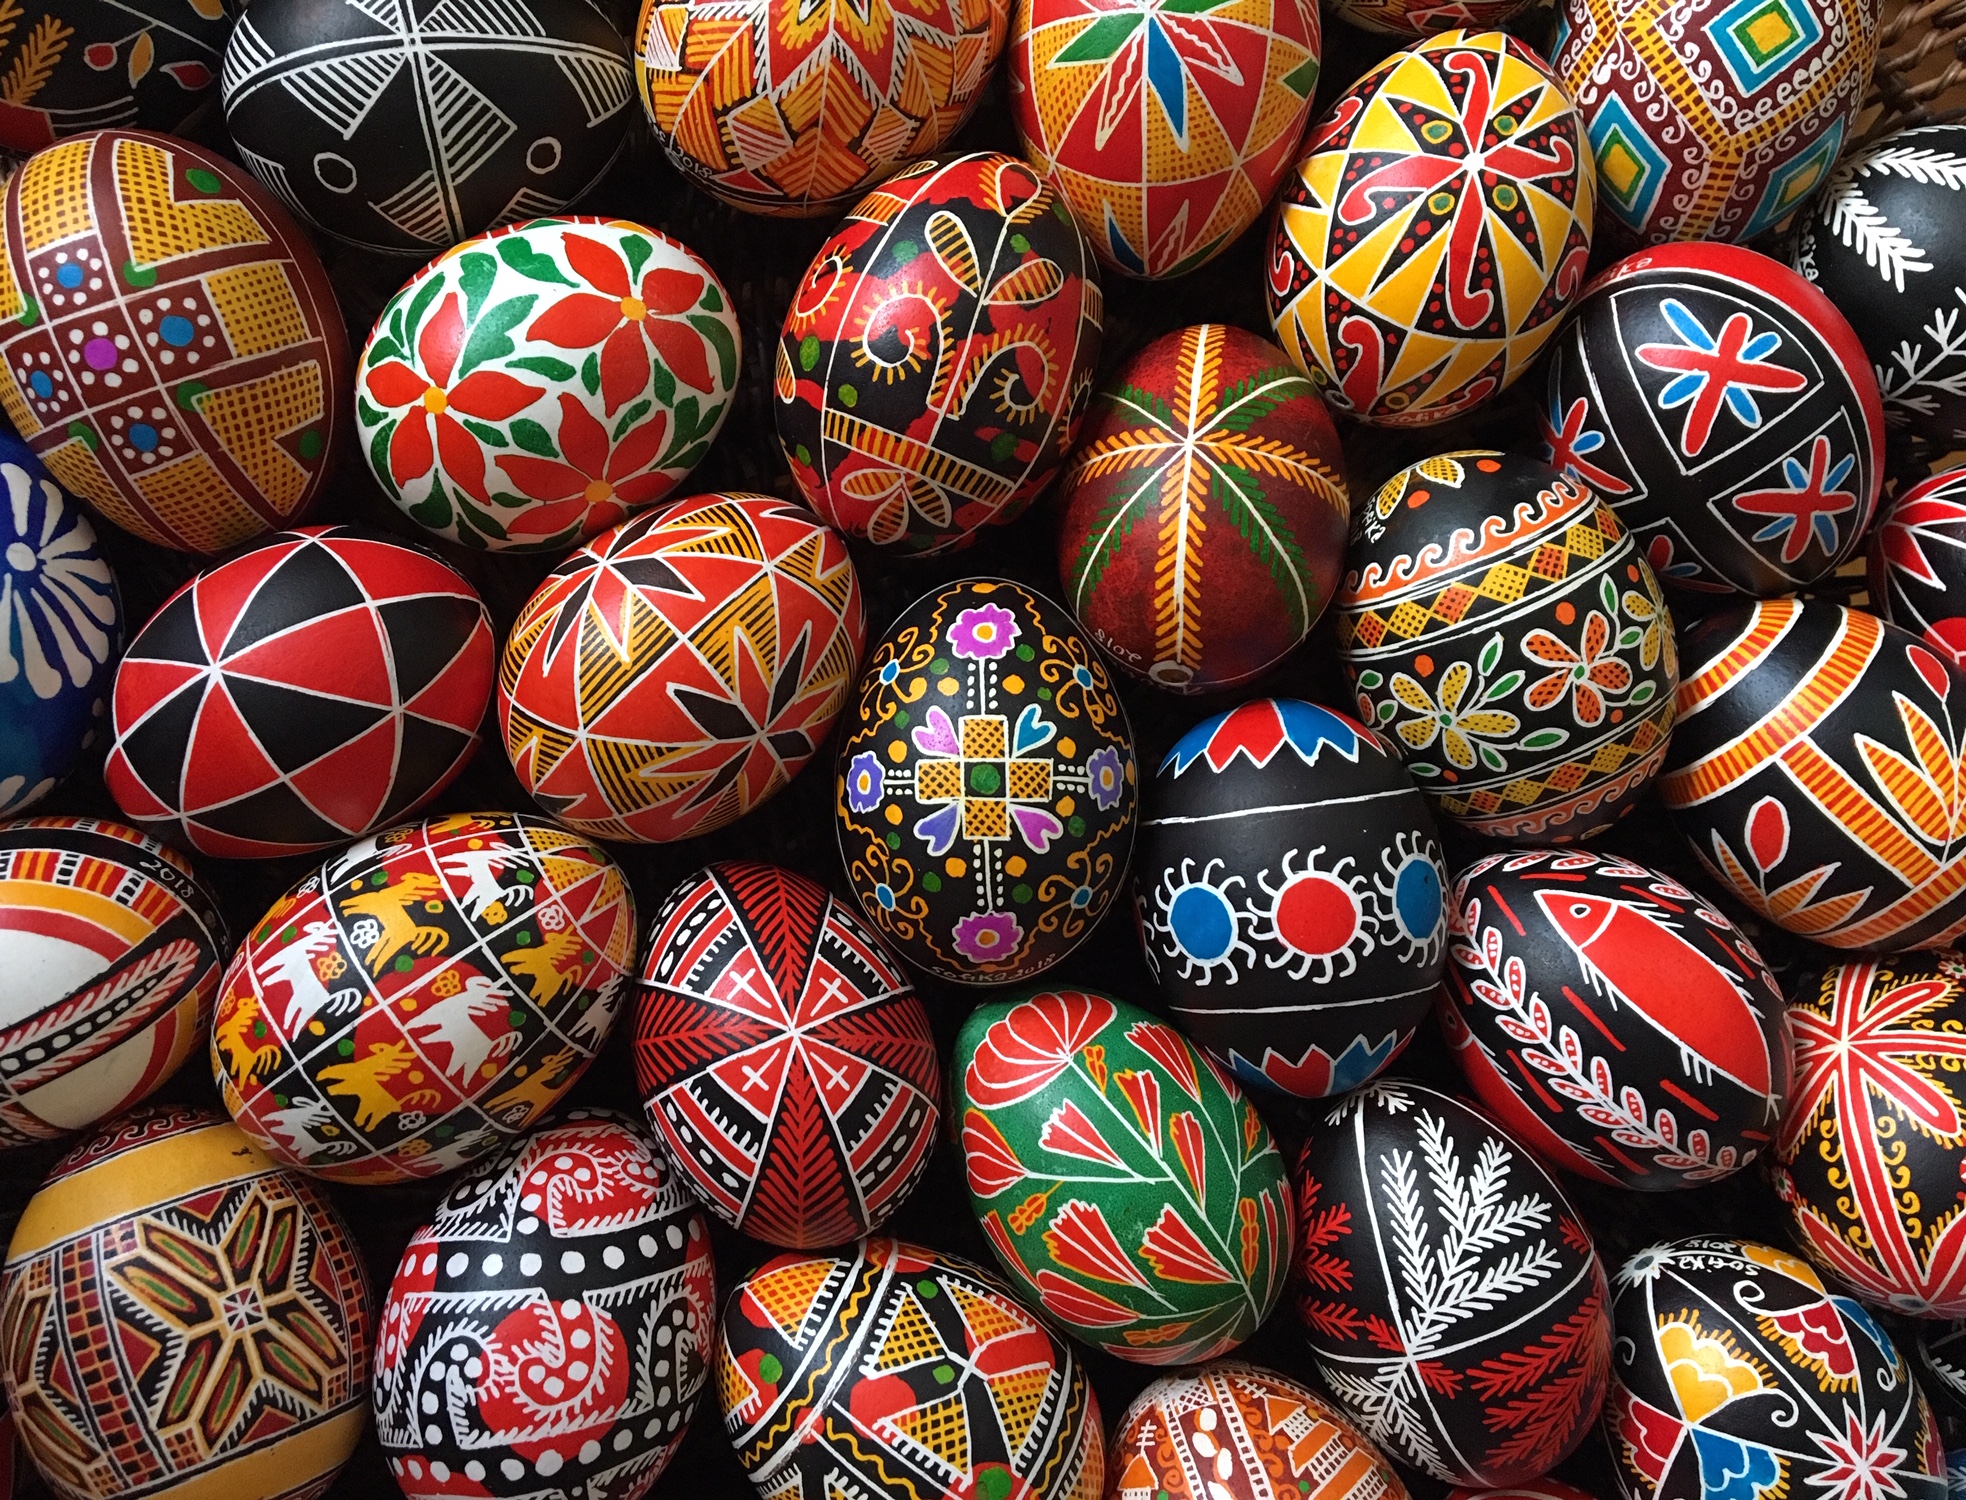 An image of dozens of pysanka eggs